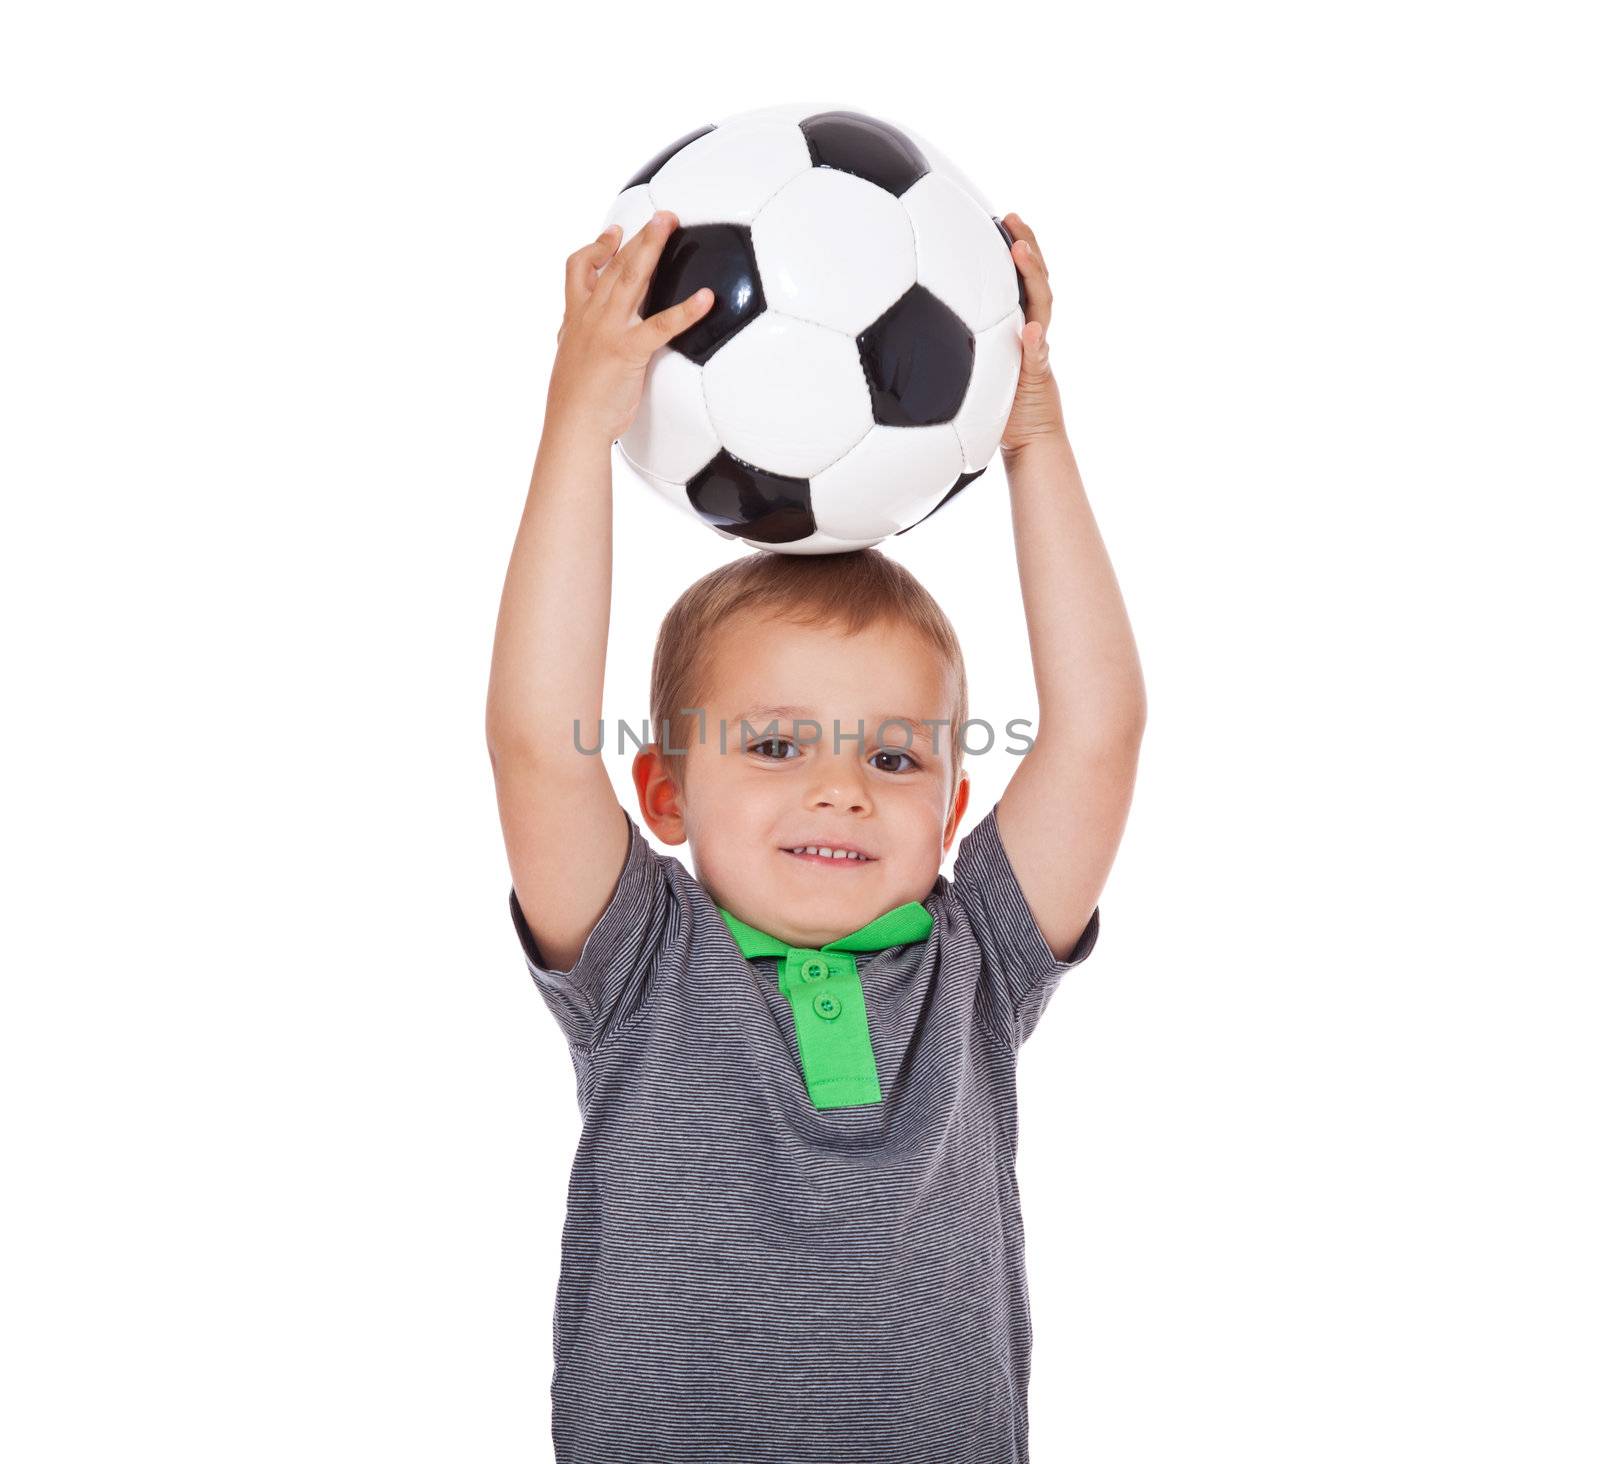 Boy holding soccer ball by kaarsten